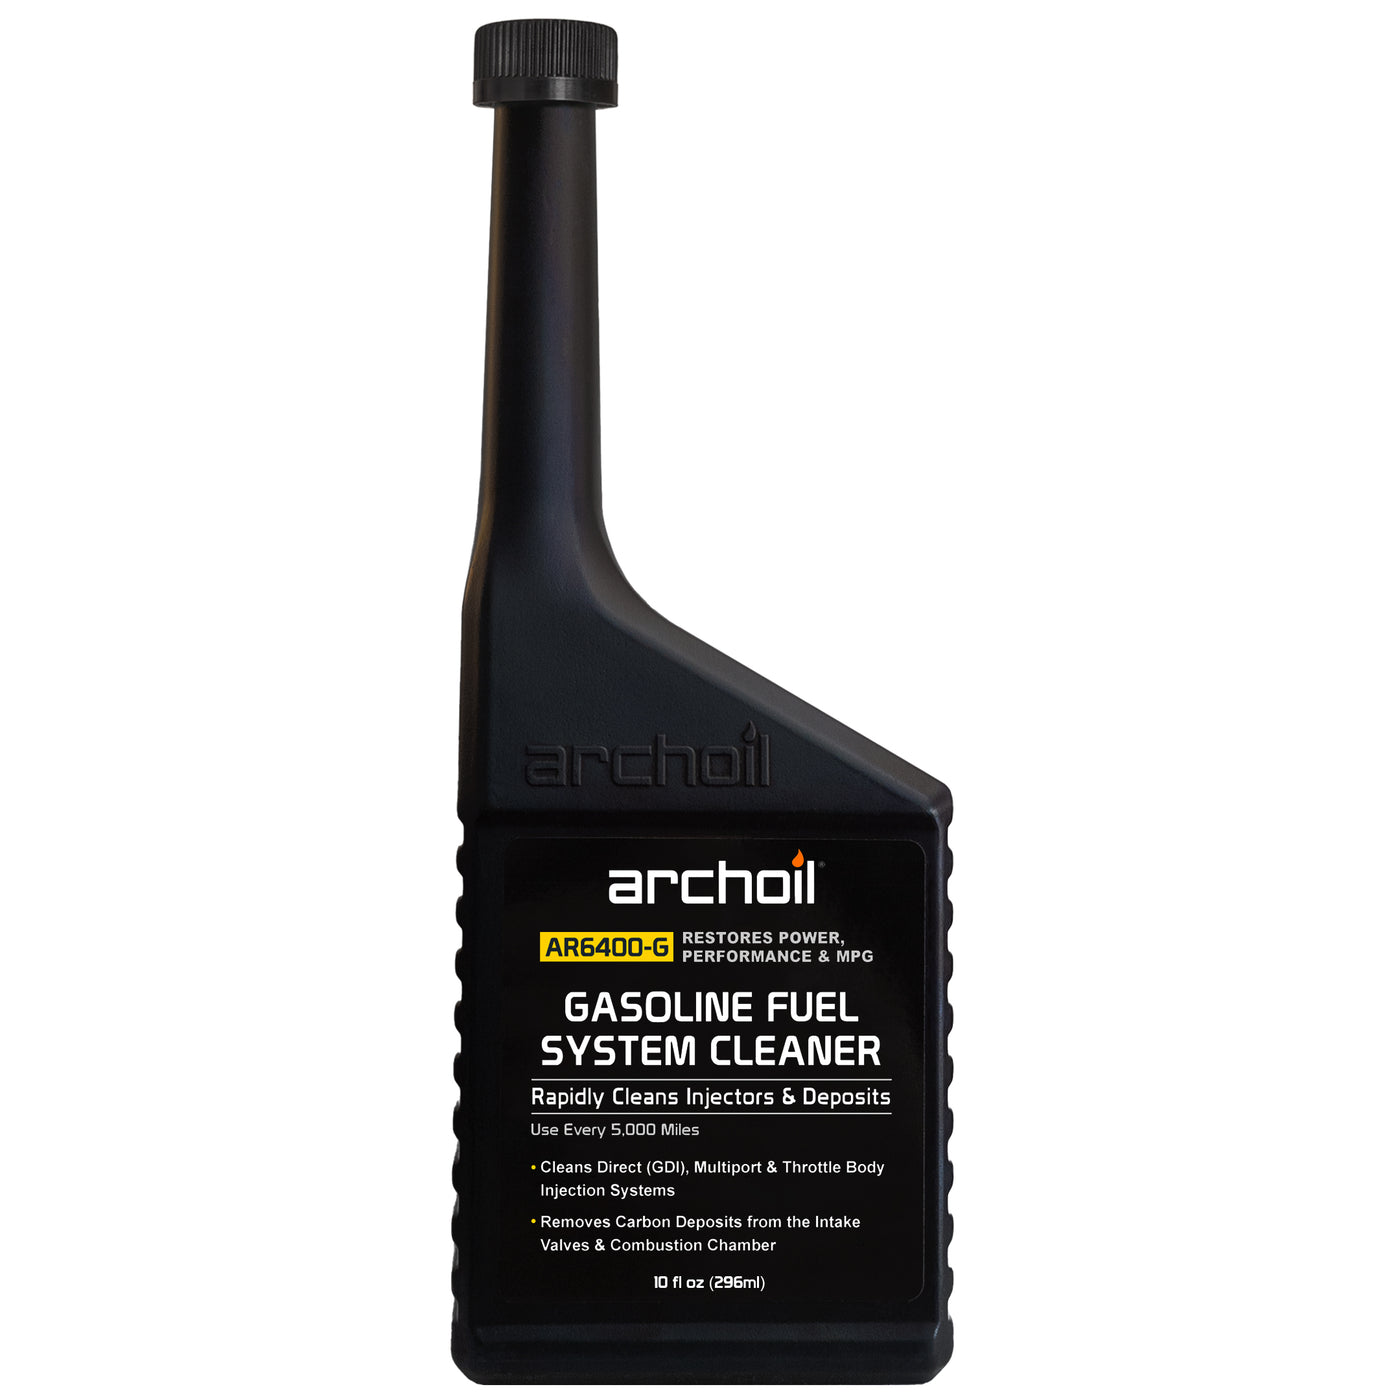 Free AR6400-G Gasoline Fuel System Cleaner